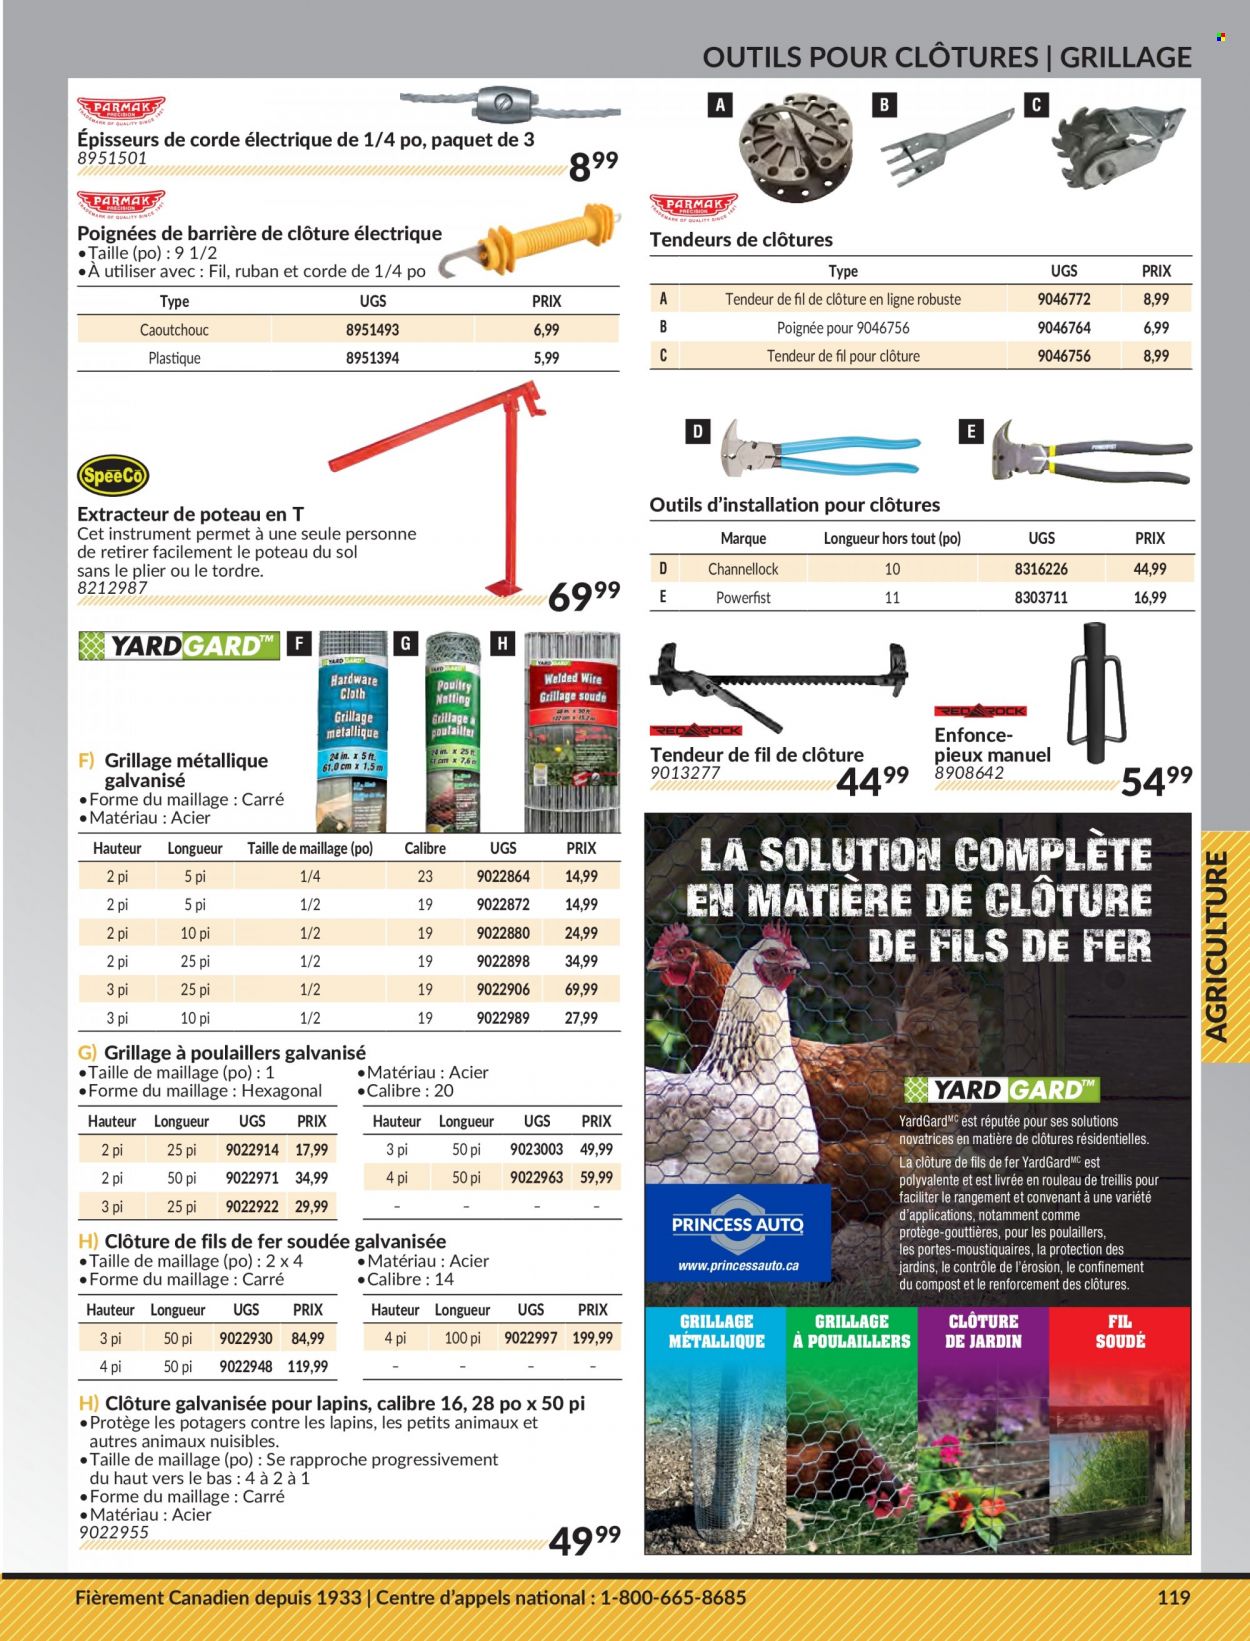 thumbnail - Princess Auto Flyer - Sales products - pliers, compost. Page 123.